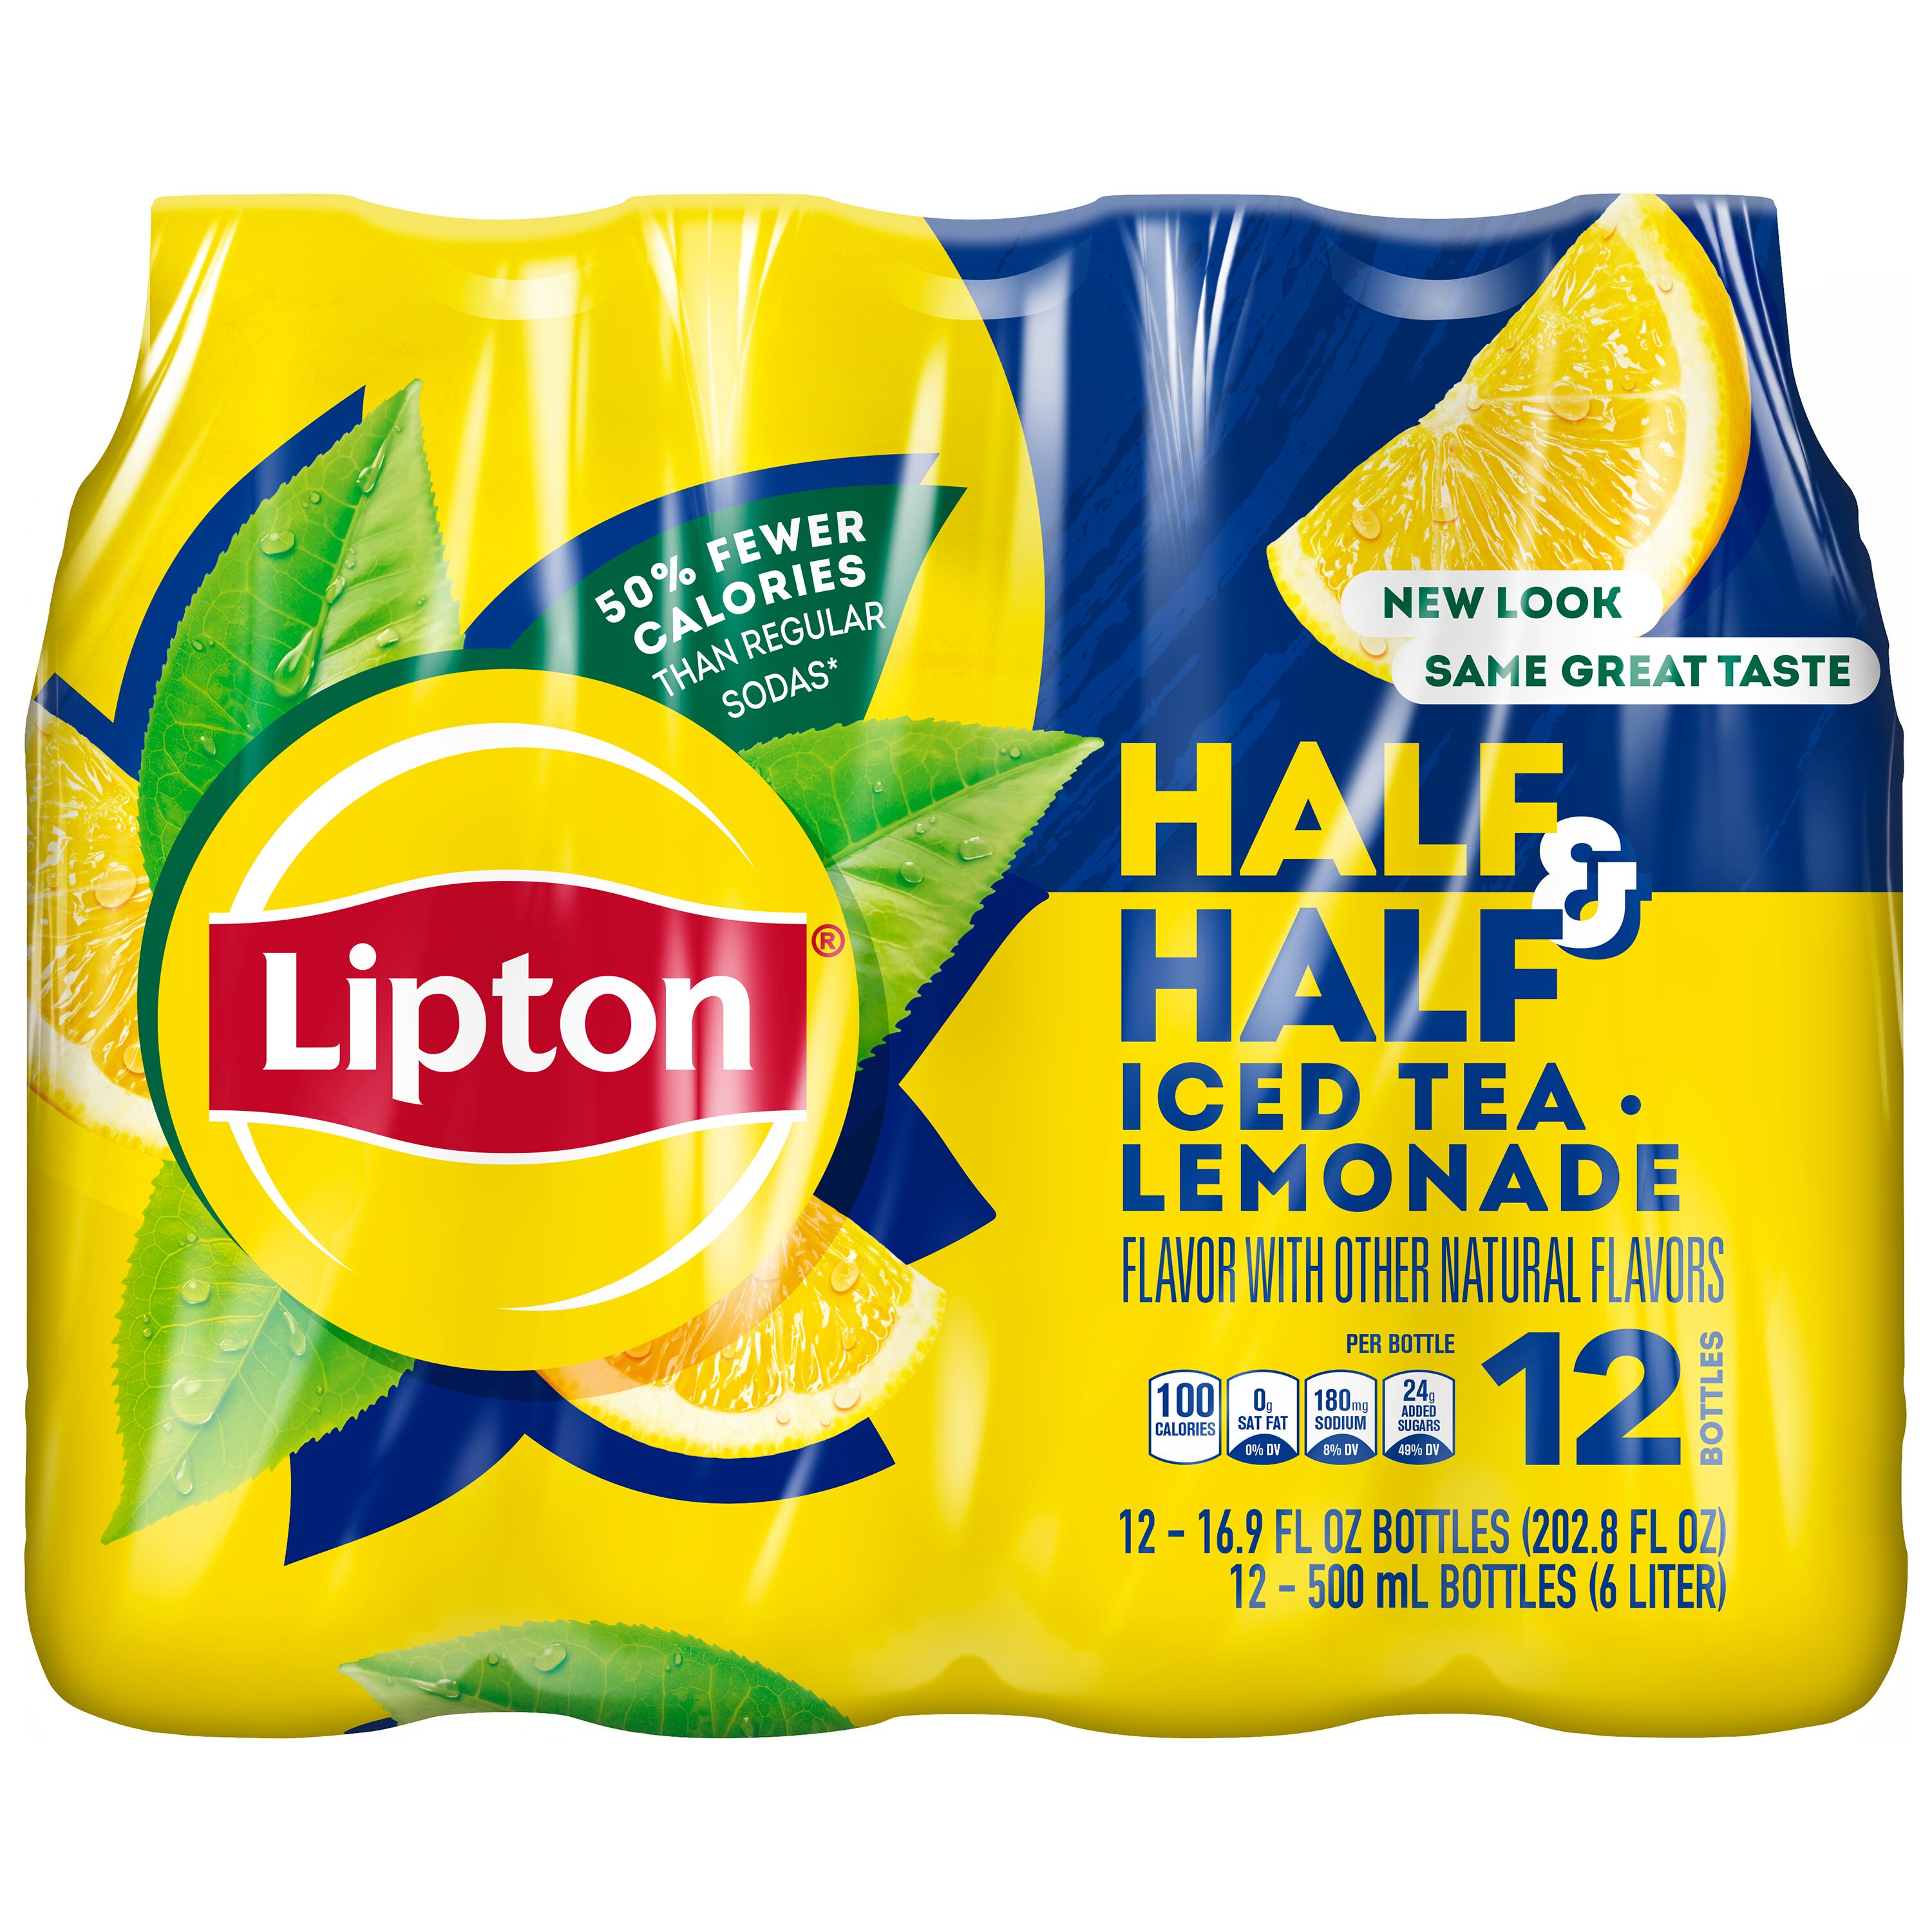 Lipton Half & Half Lemonade Iced Tea, 16.9 fl oz, 12 Pack Bottles - image 2 of 6